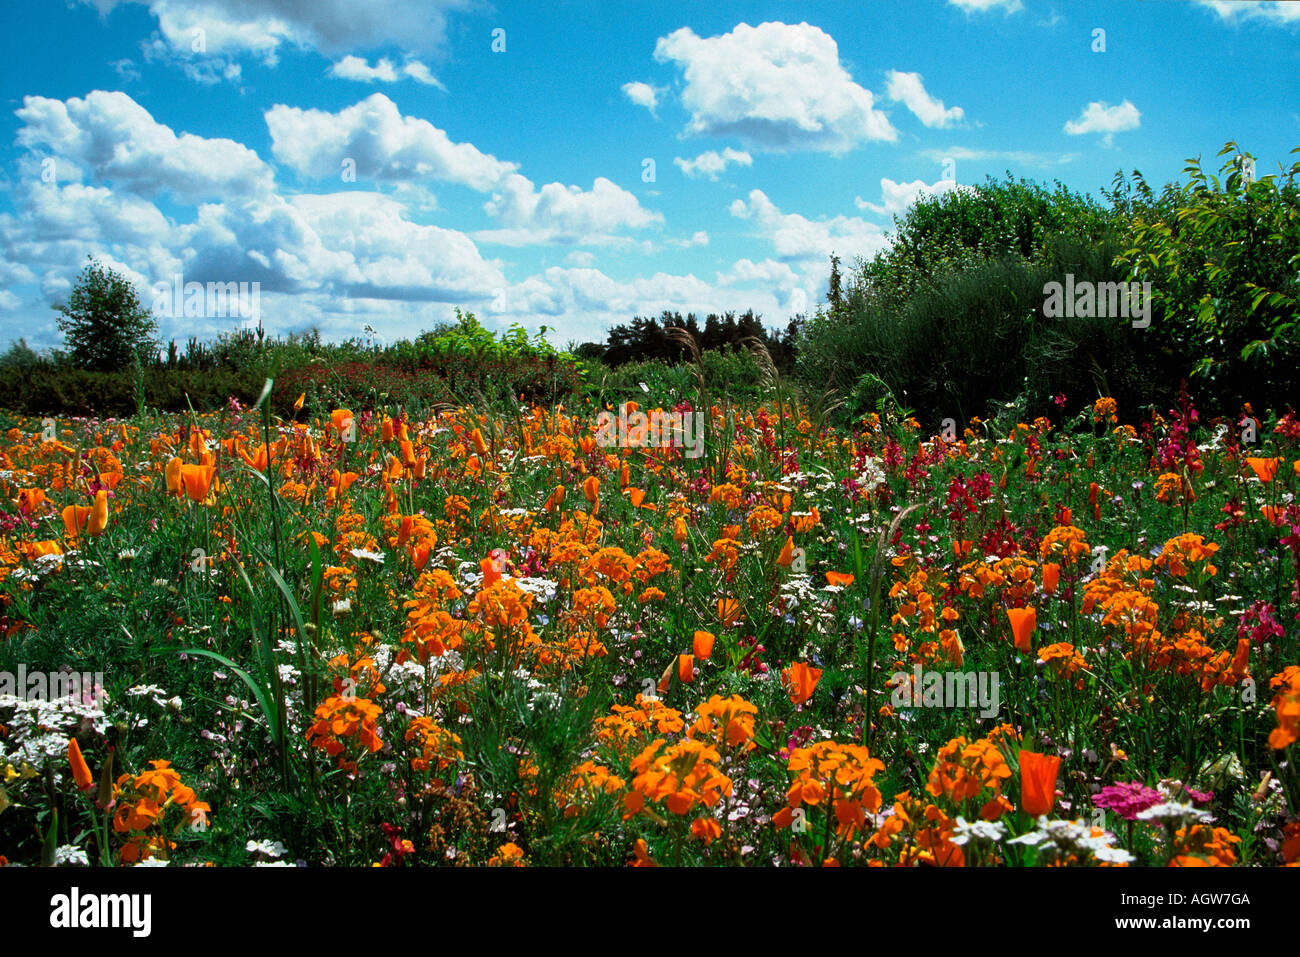 Flower meadow / Blumenwiese Banque D'Images